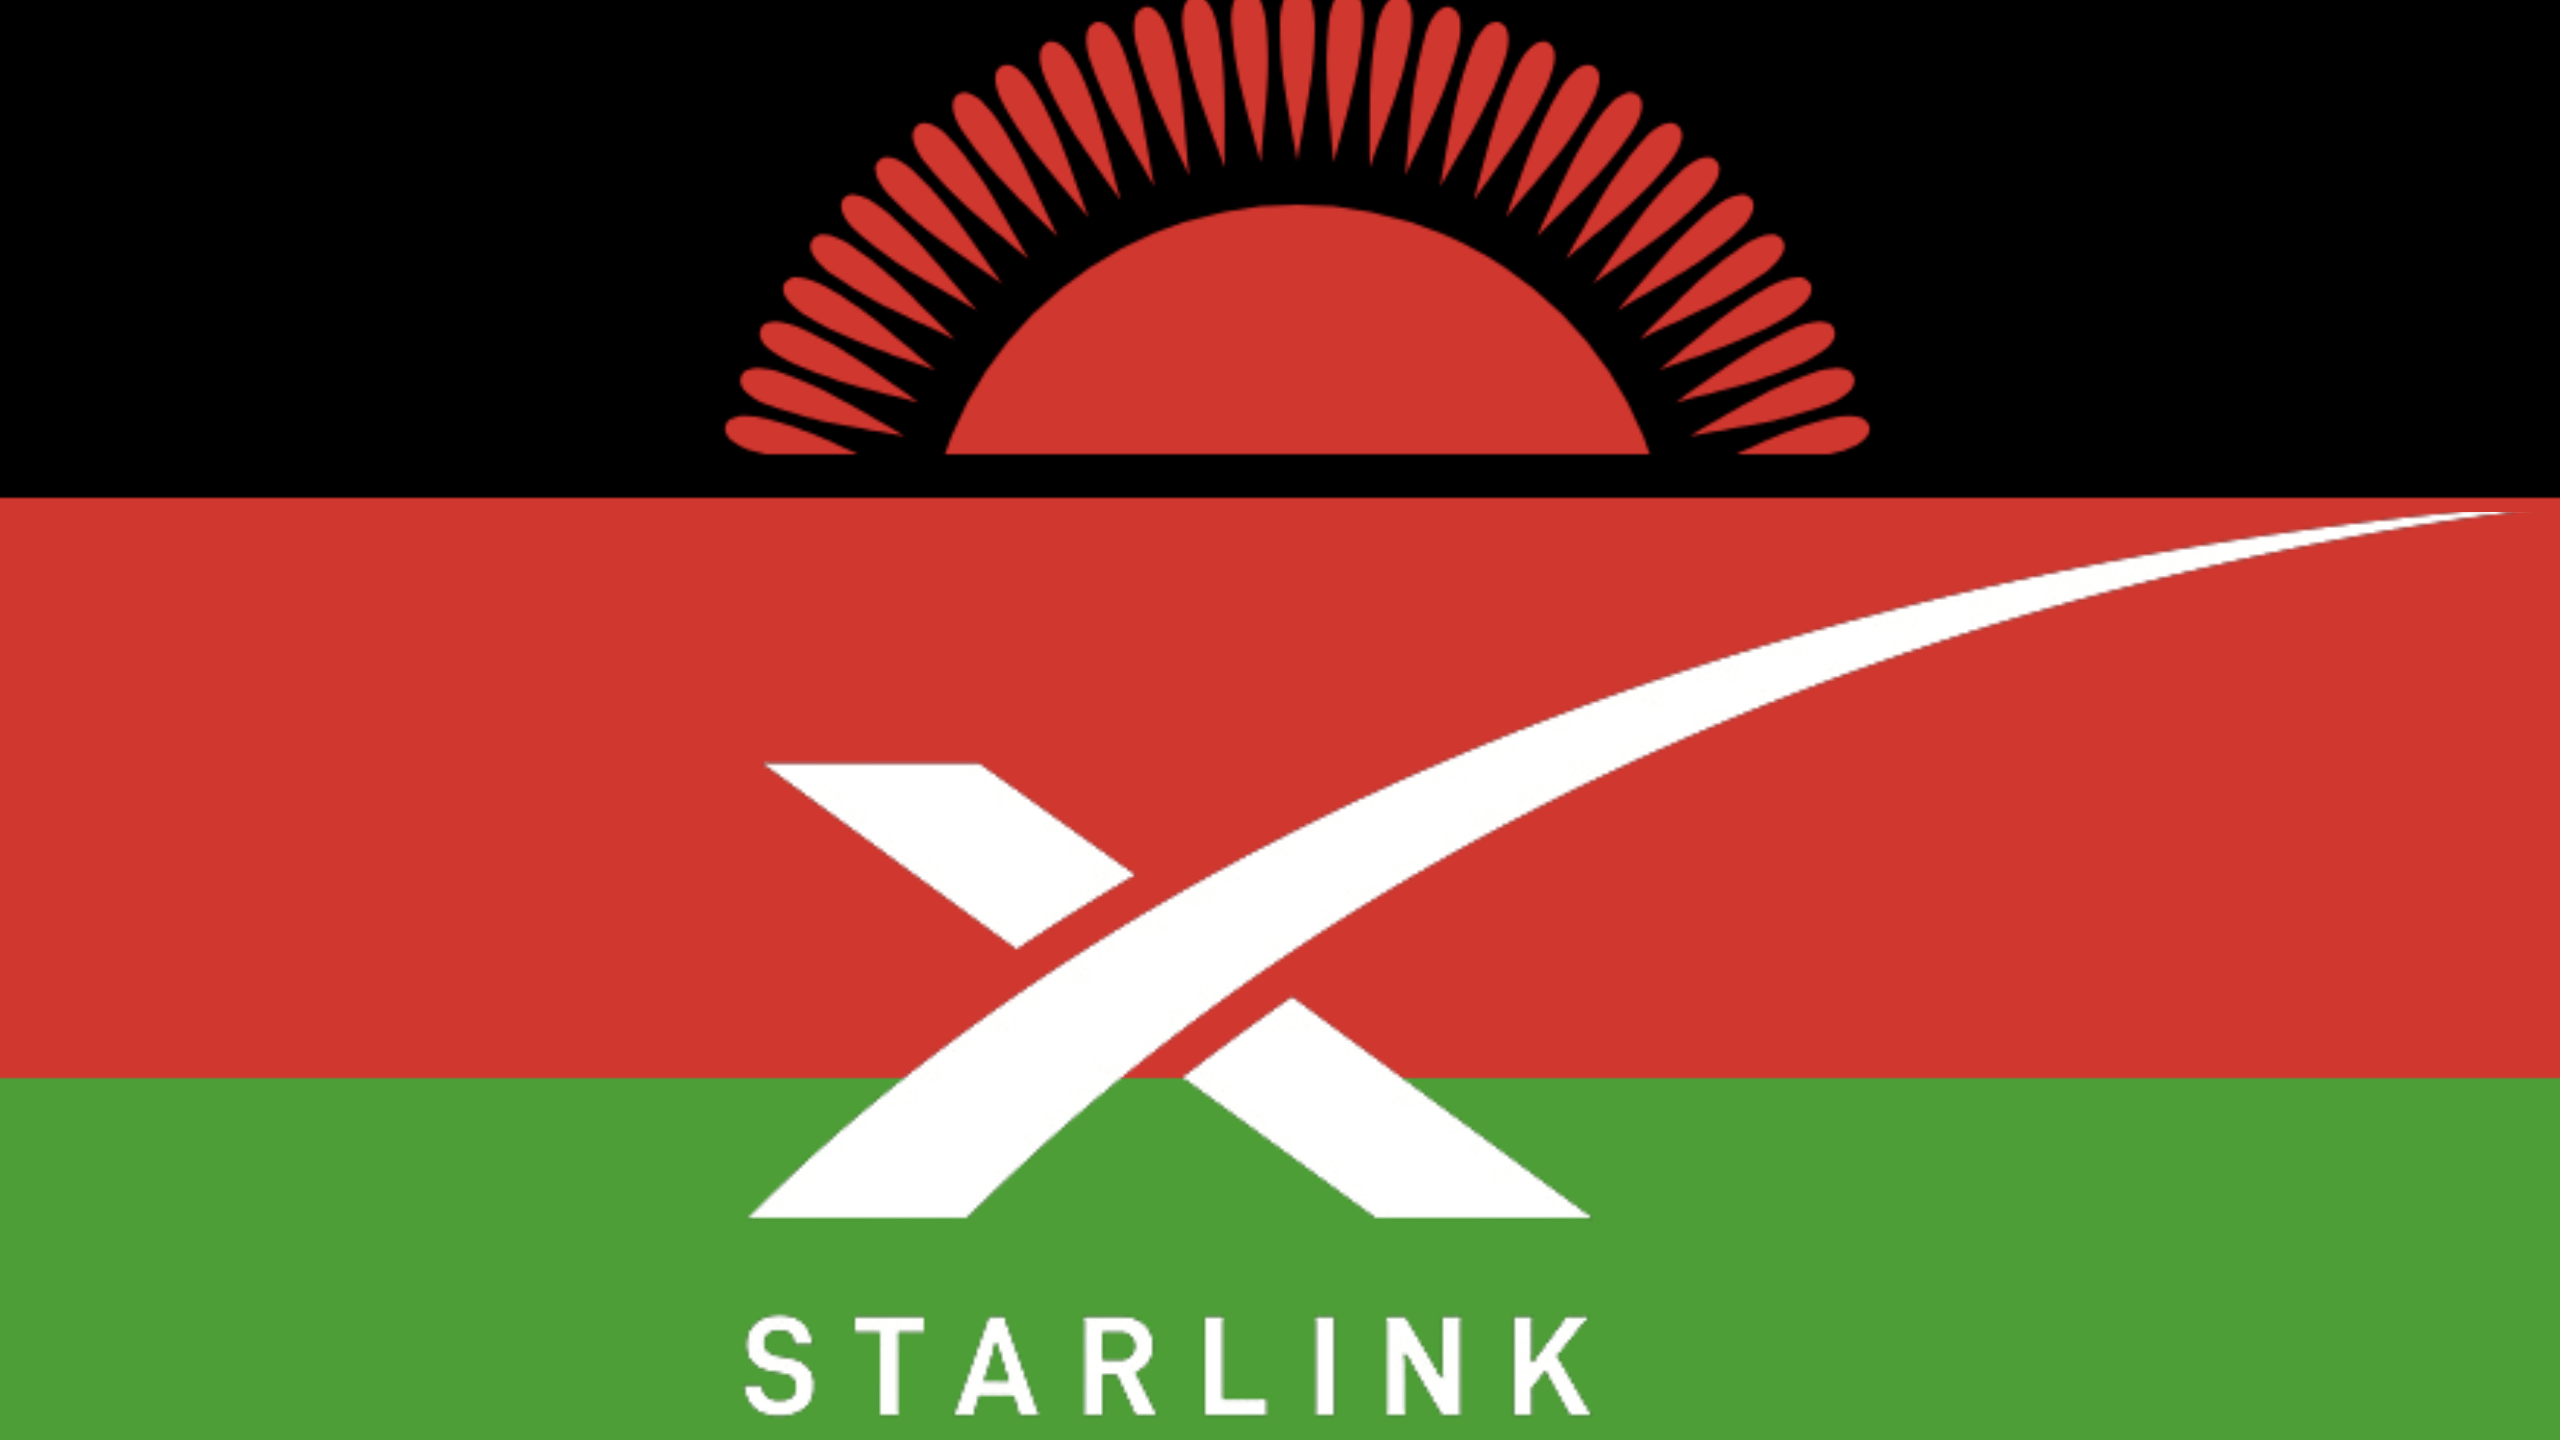 Starlink akan datang ke Malawi;  Pengarah MACRA: “Selamat datang ke Malawi, Starlink”